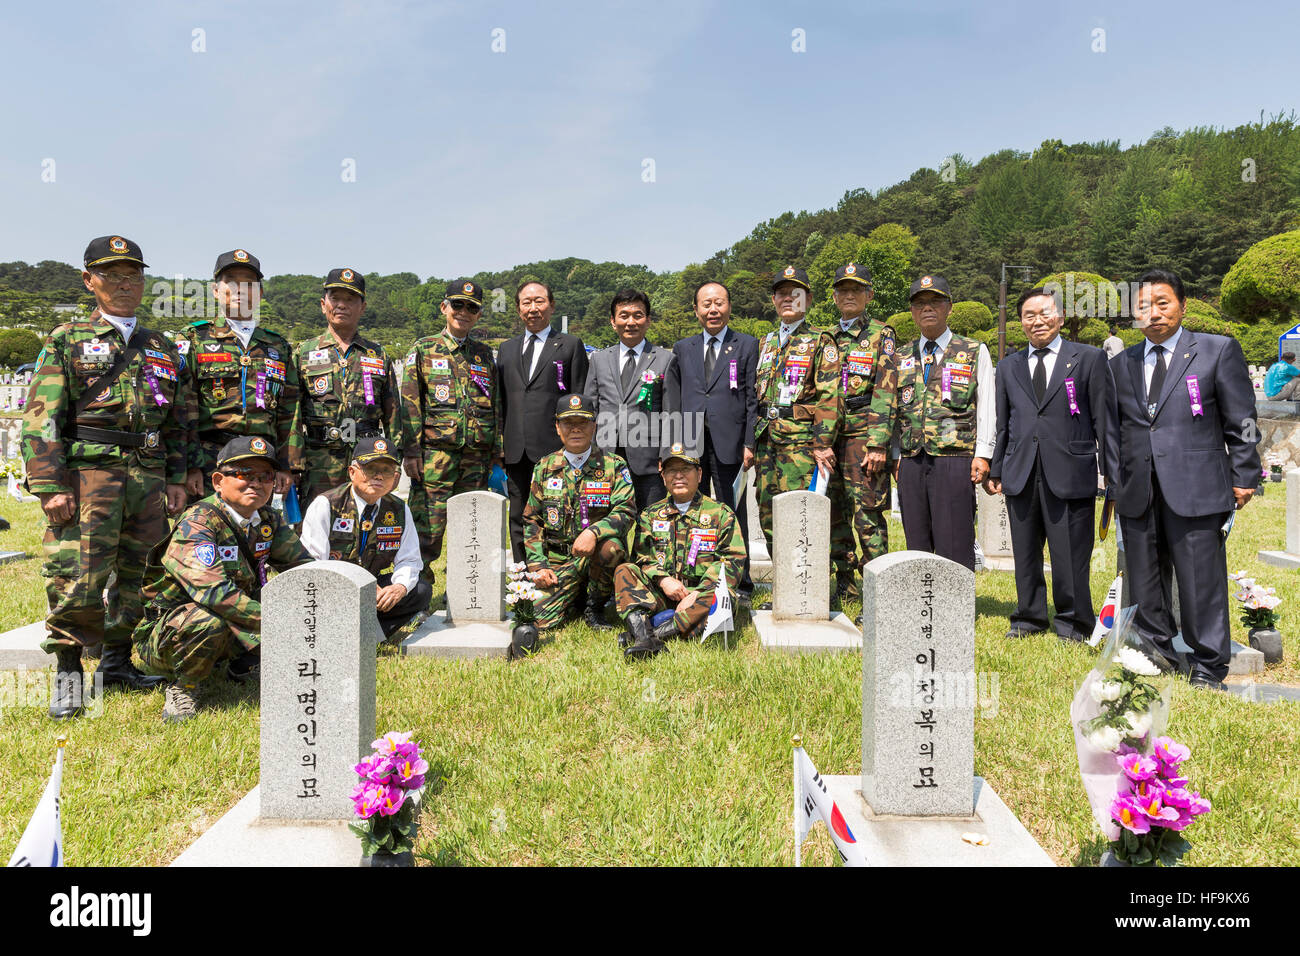 Vietnam War Veterans commemorating soldiers dead in the Vietnam War during the Memorial Day. Seoul, South Korea Stock Photo